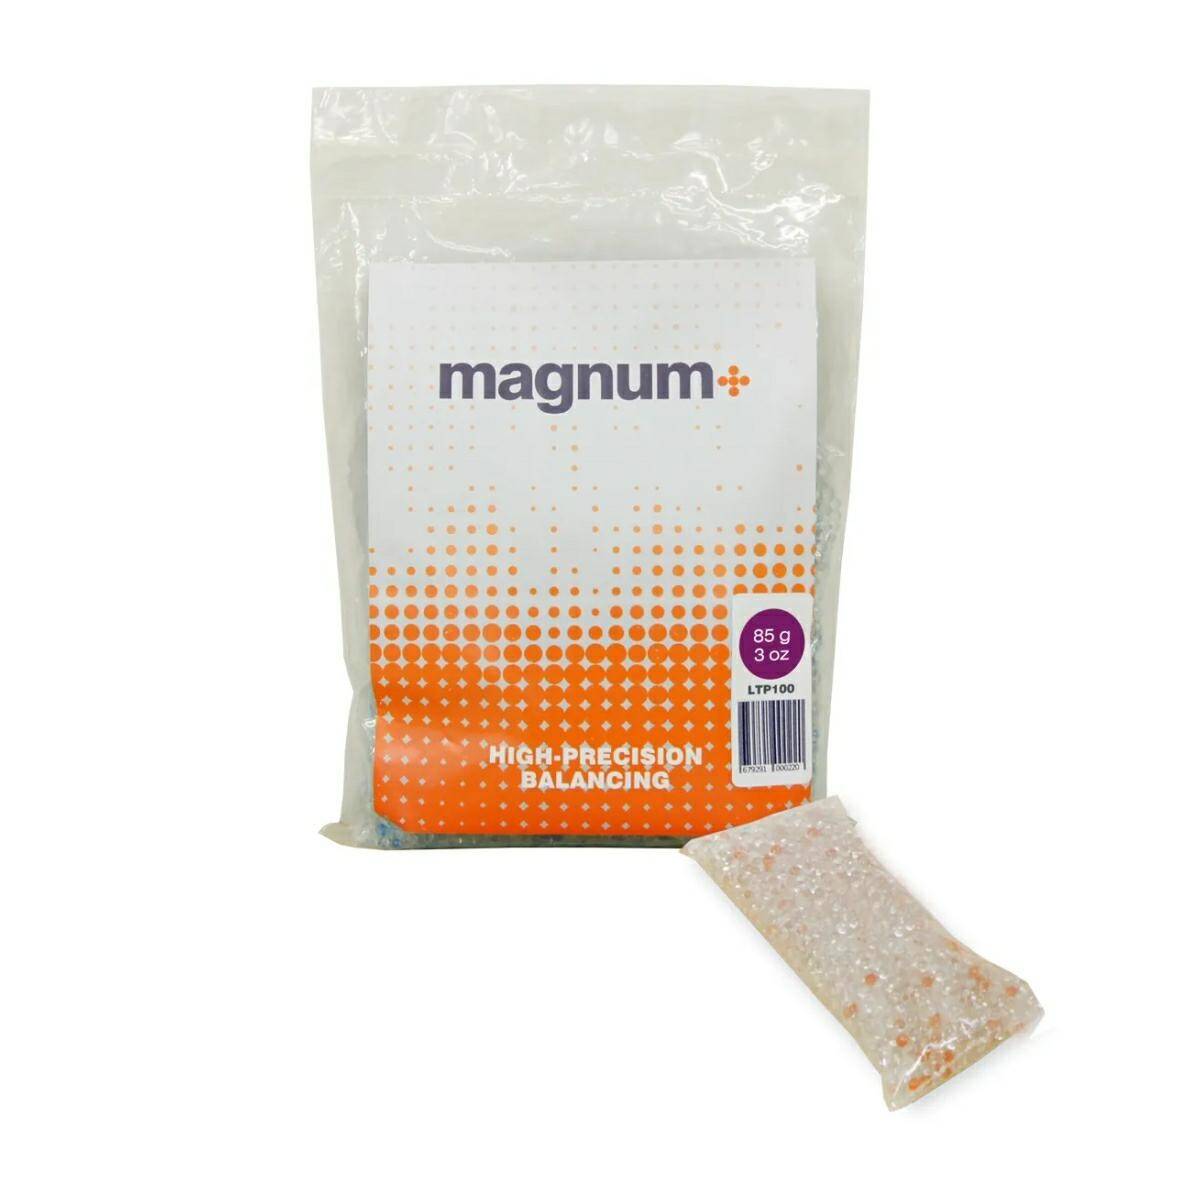 Magnum Plus Balance Powder 100g (T-LTP100)